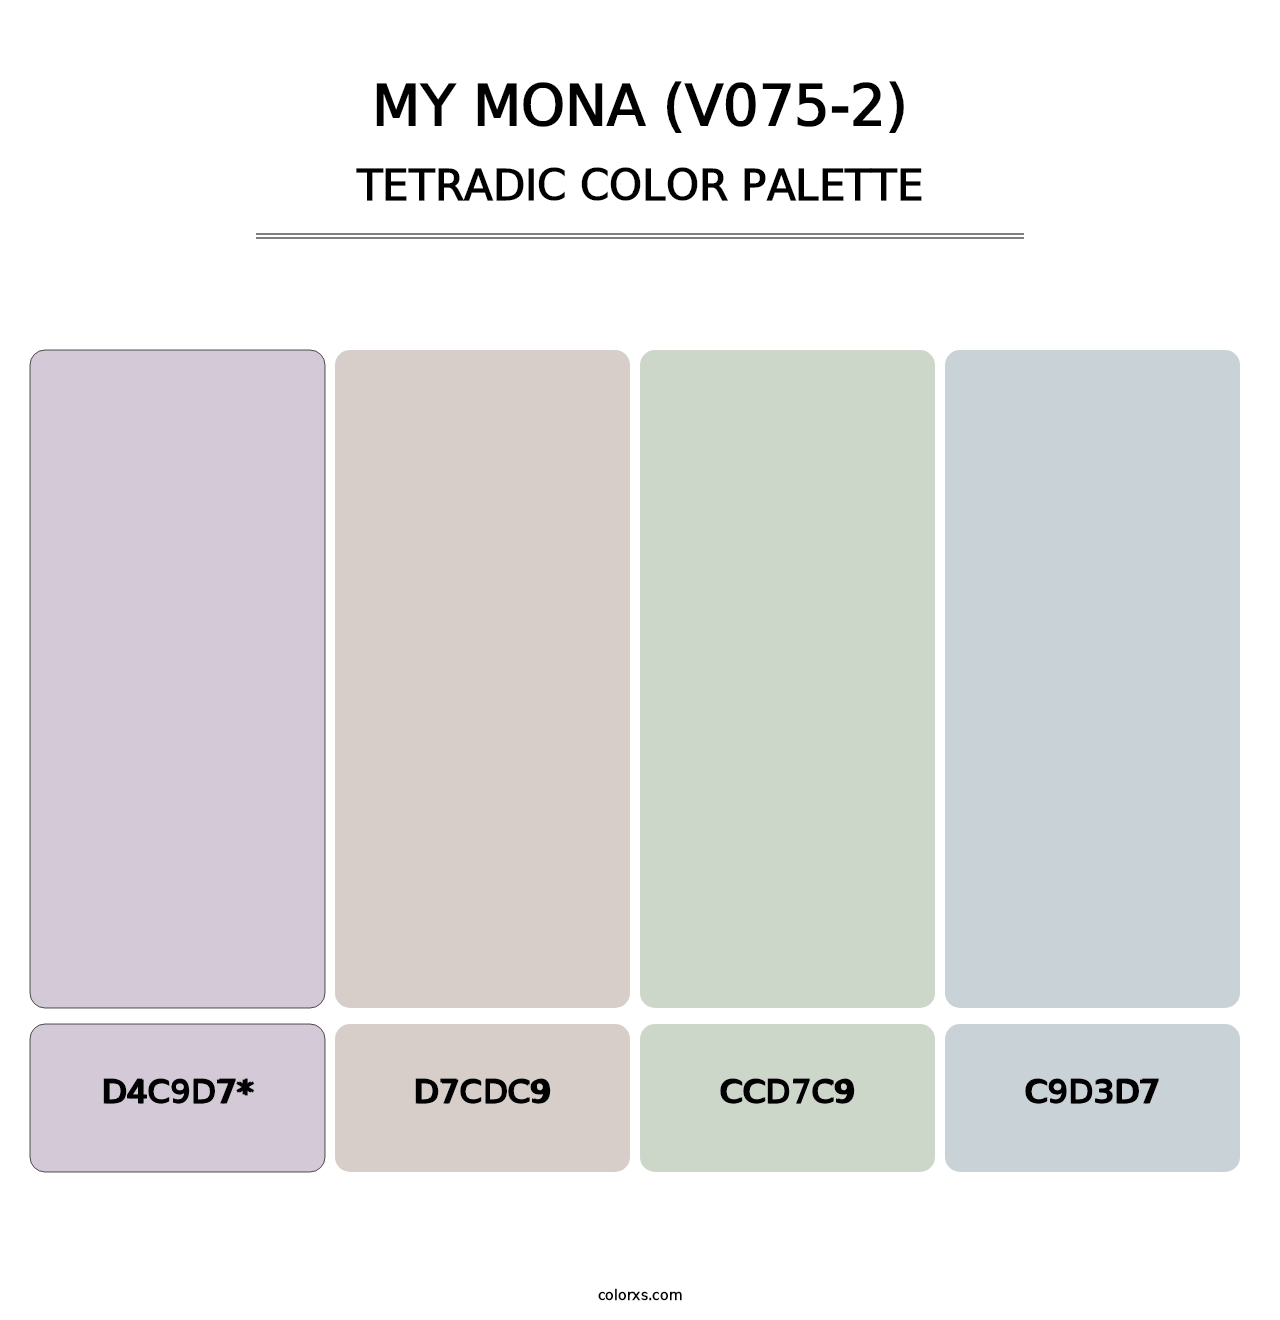 My Mona (V075-2) - Tetradic Color Palette